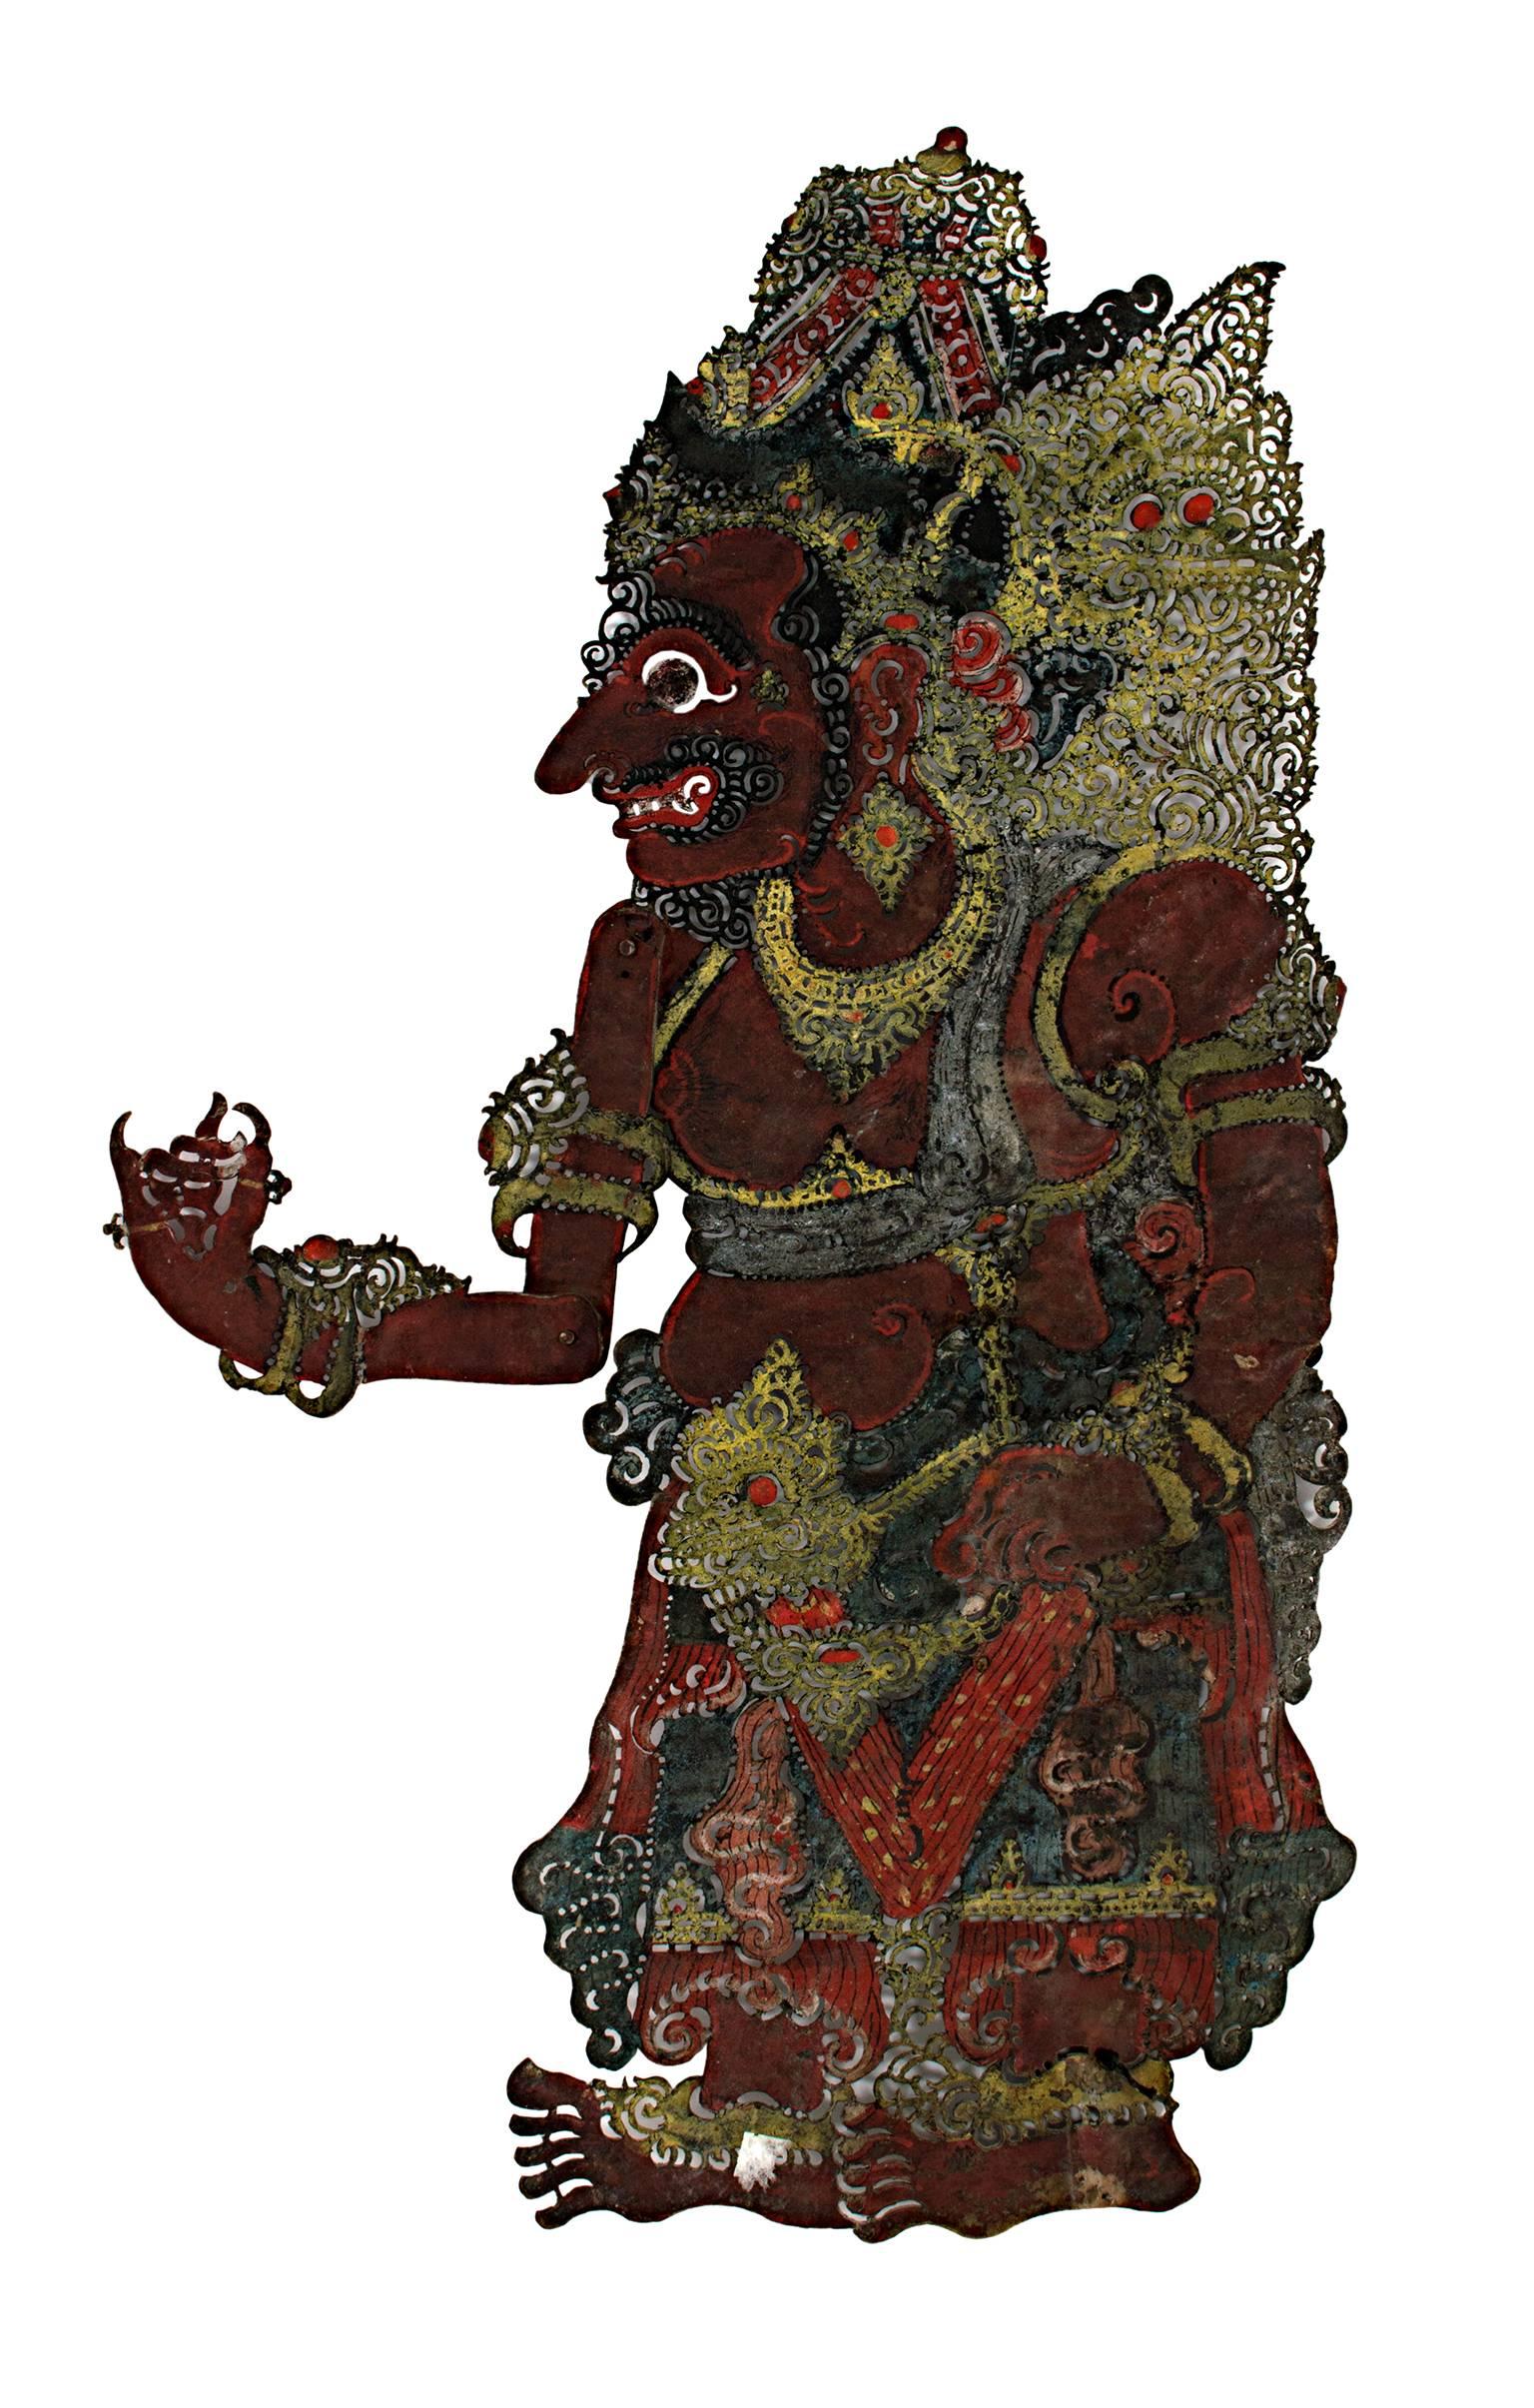 19th century puppet figure demon red ornate gold mythological Indonesian